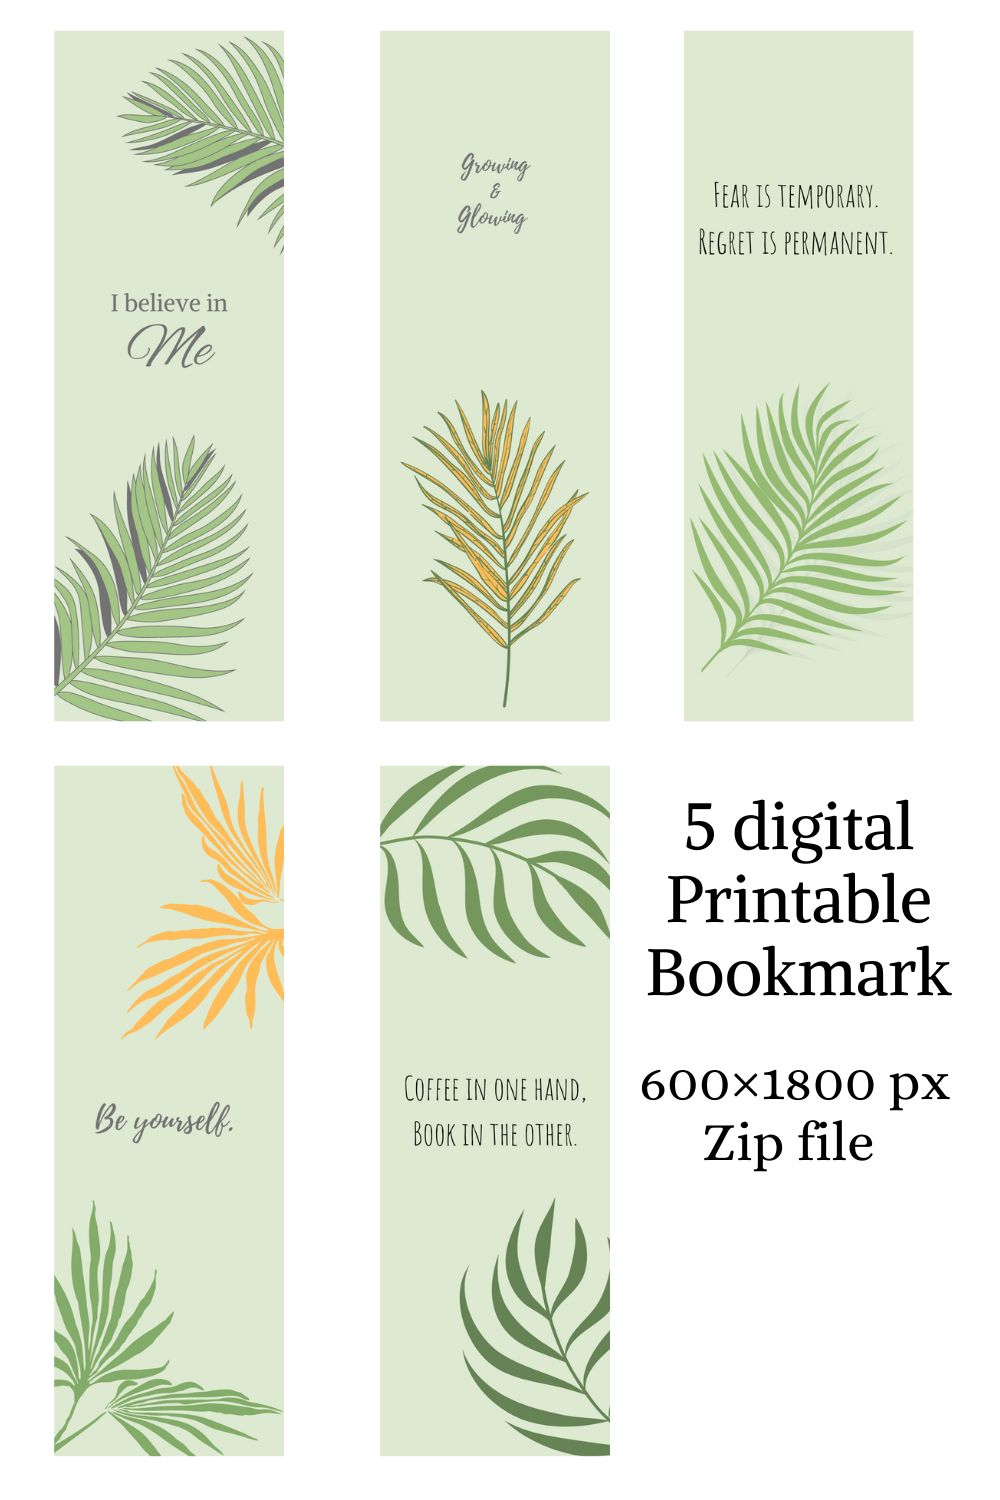 Palm Leaves Digital Bookmark pinterest image.